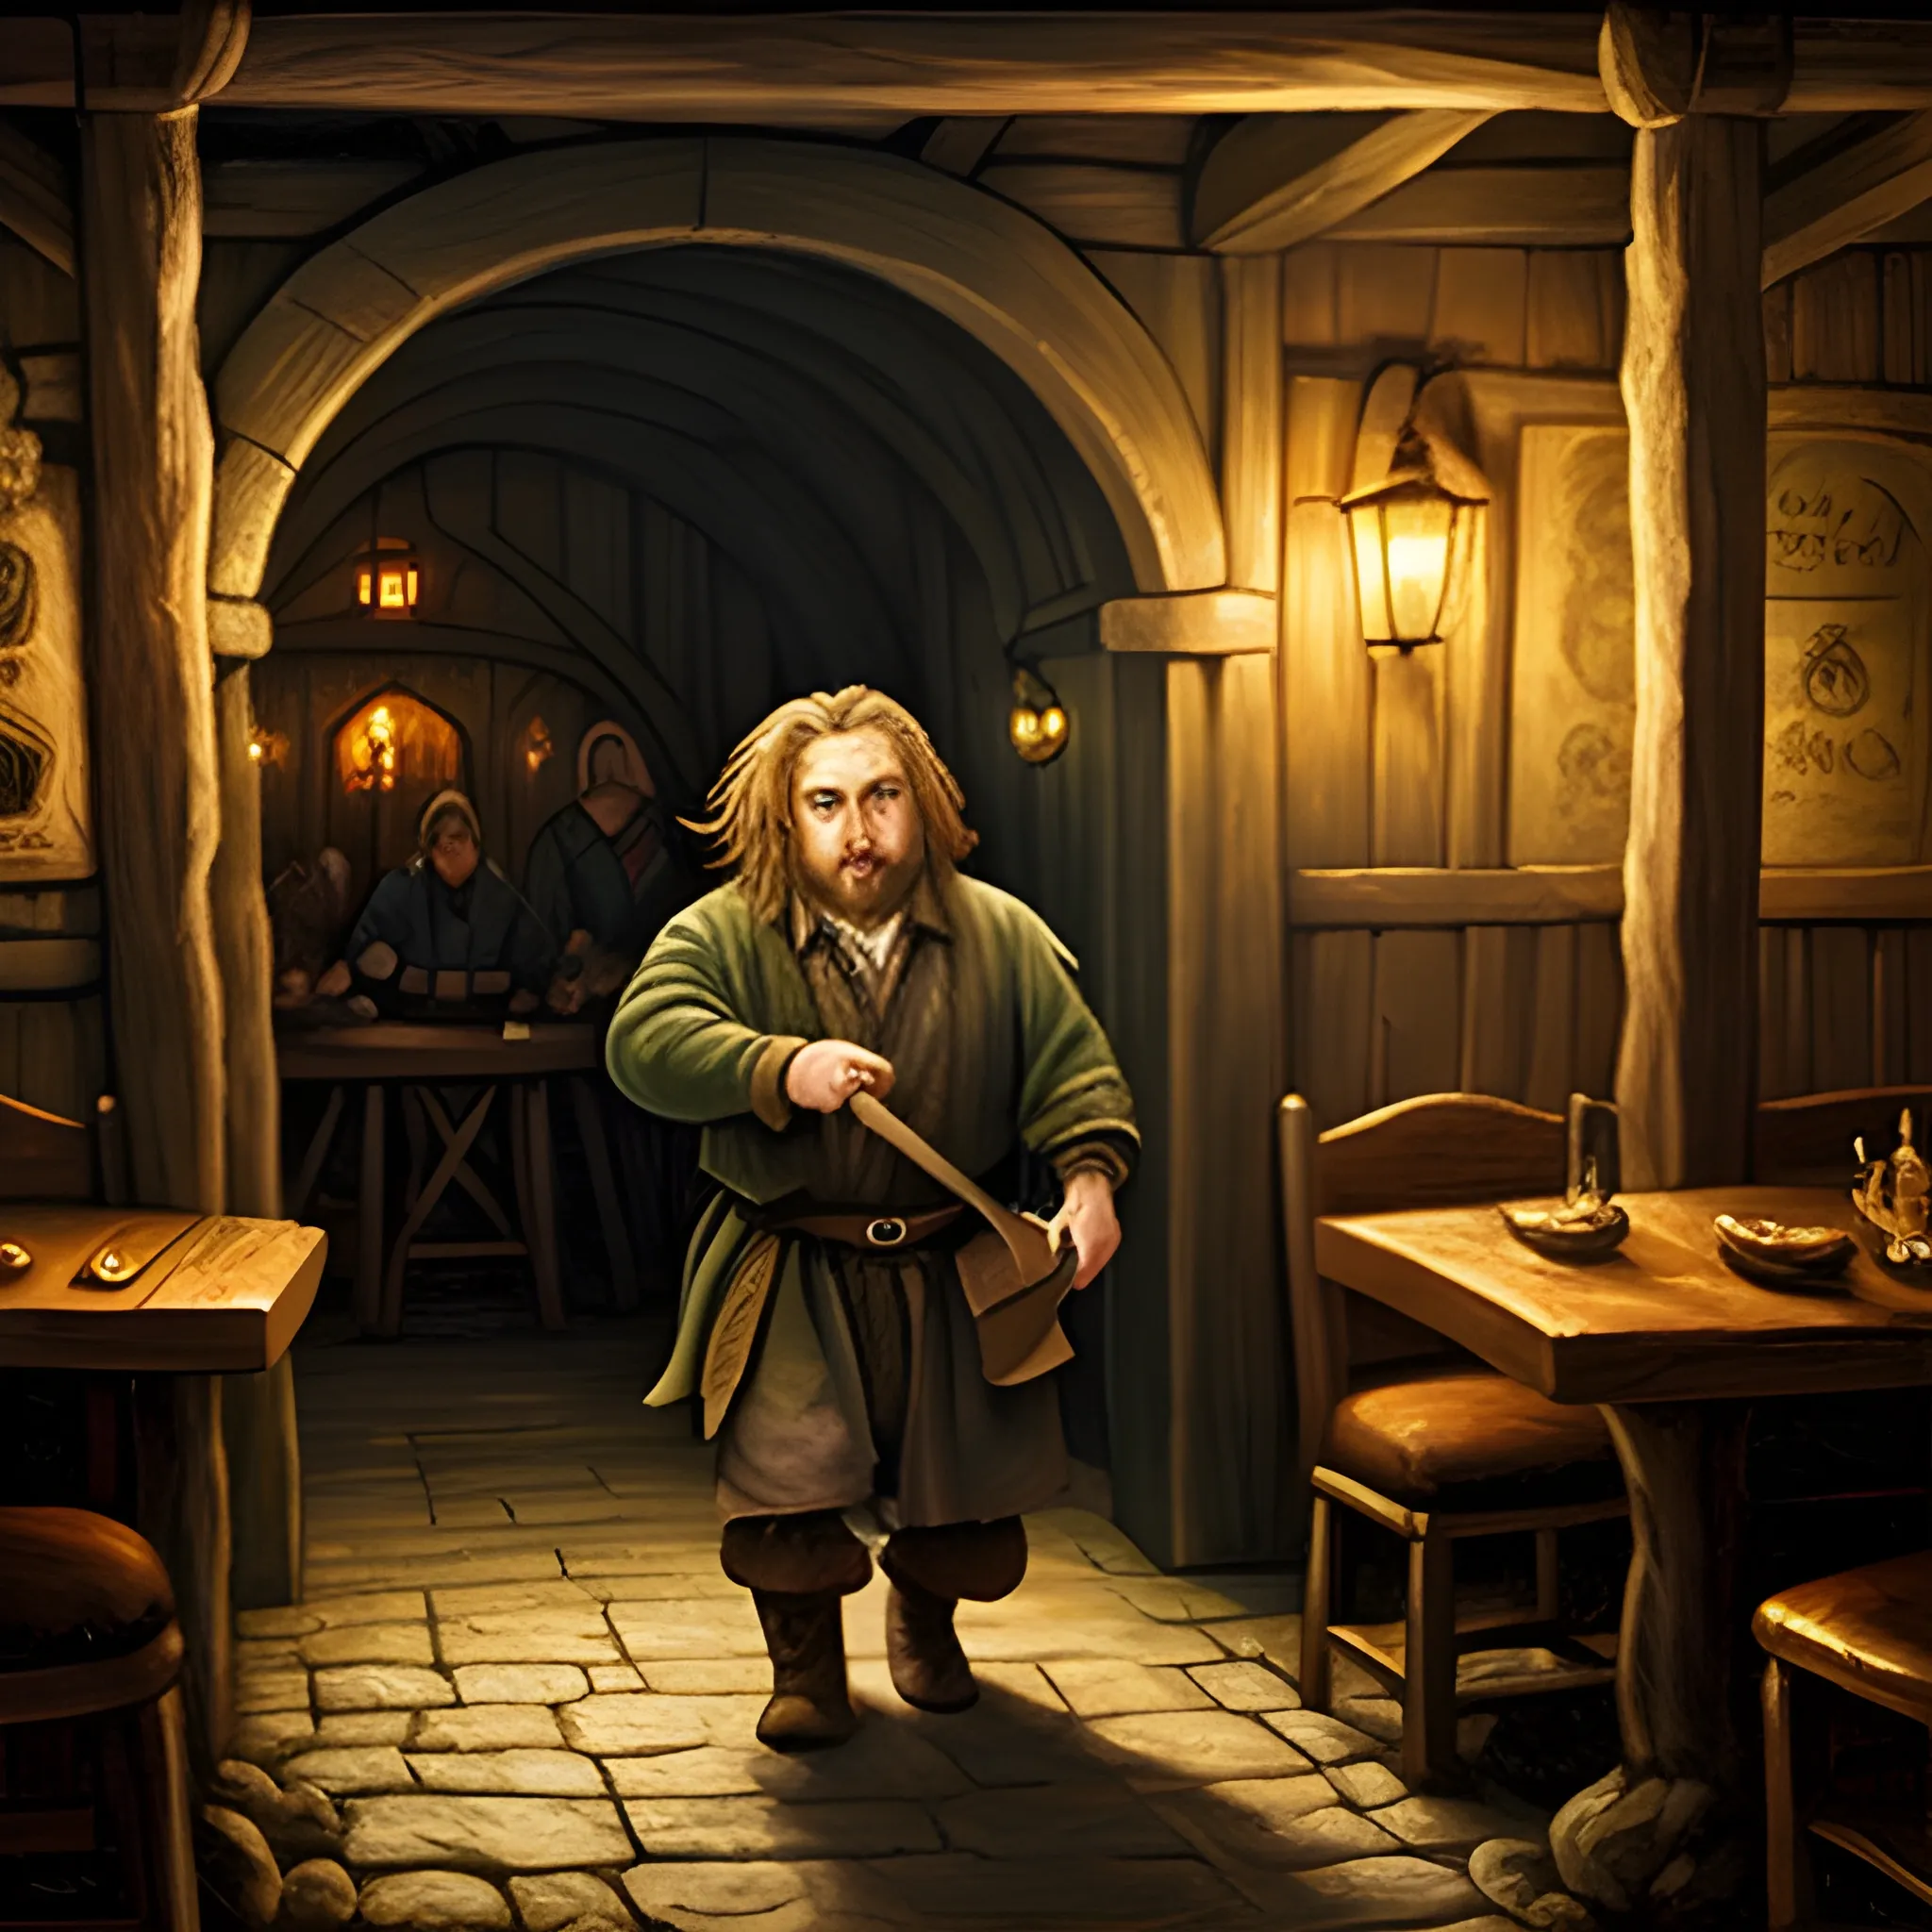 drunken hobbit walking inside the tavern at night, middle earth, Oil Painting